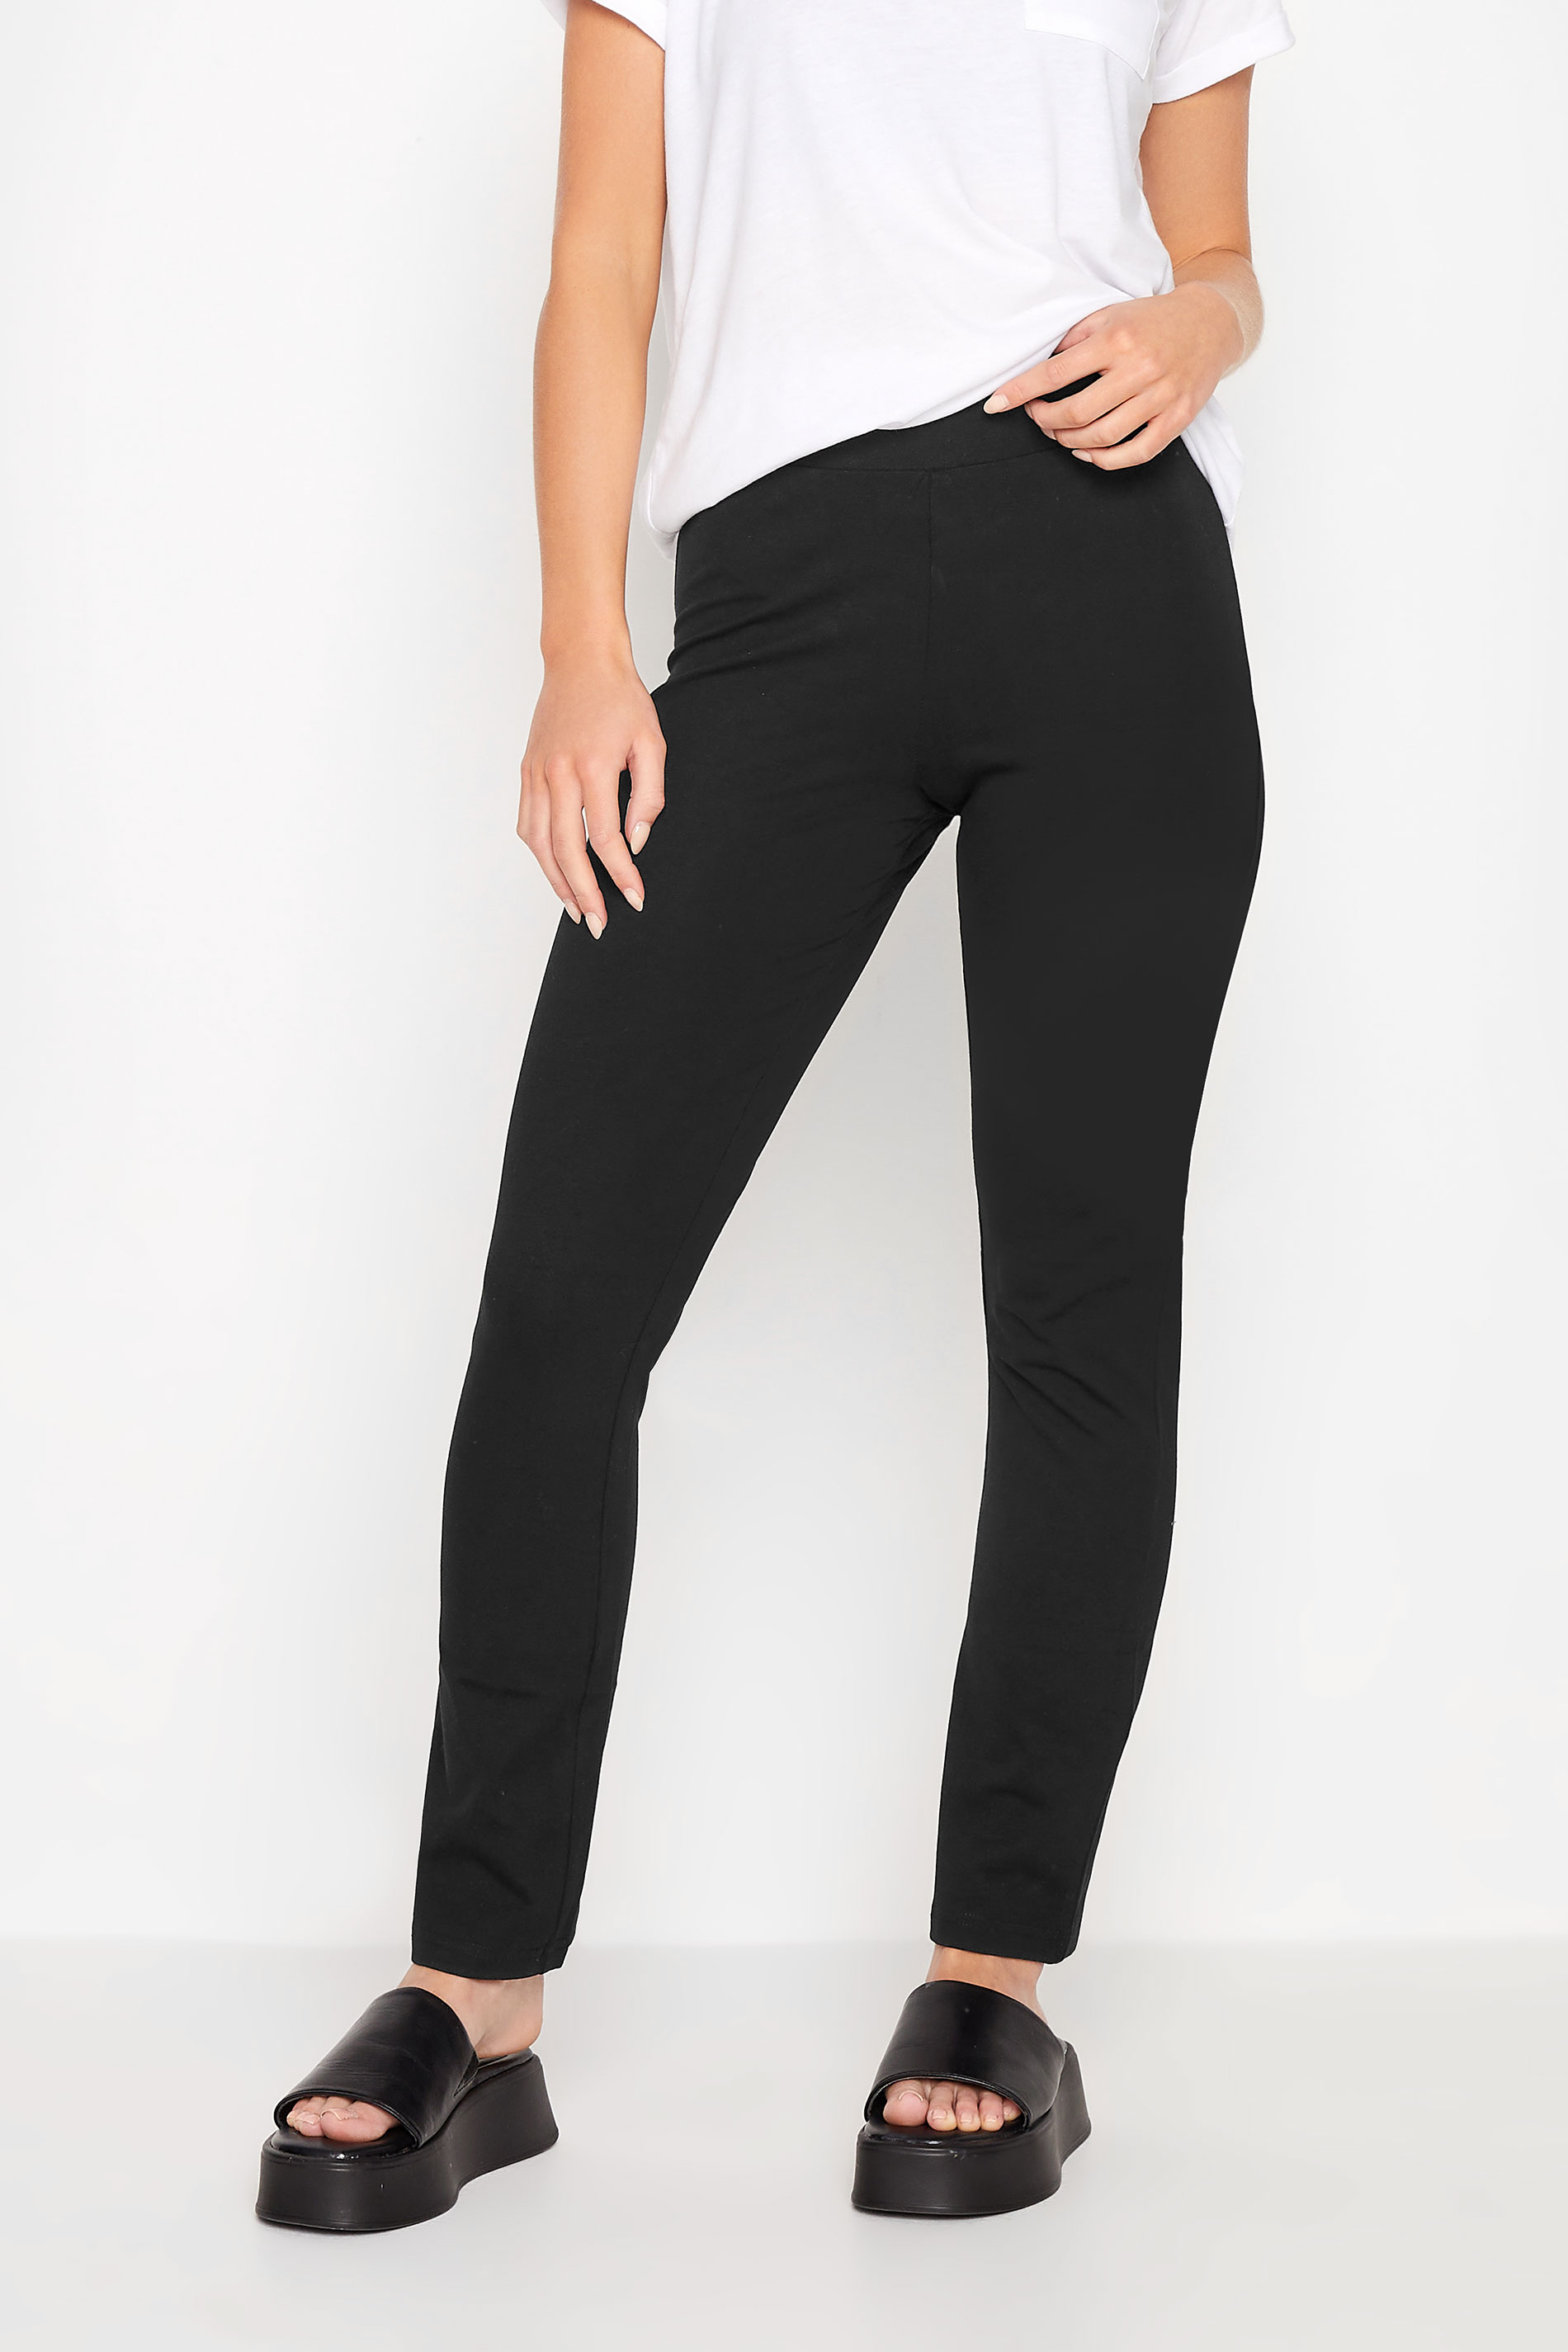 PixieGirl Black Slim Leg Yoga Pants | PixieGirl  1